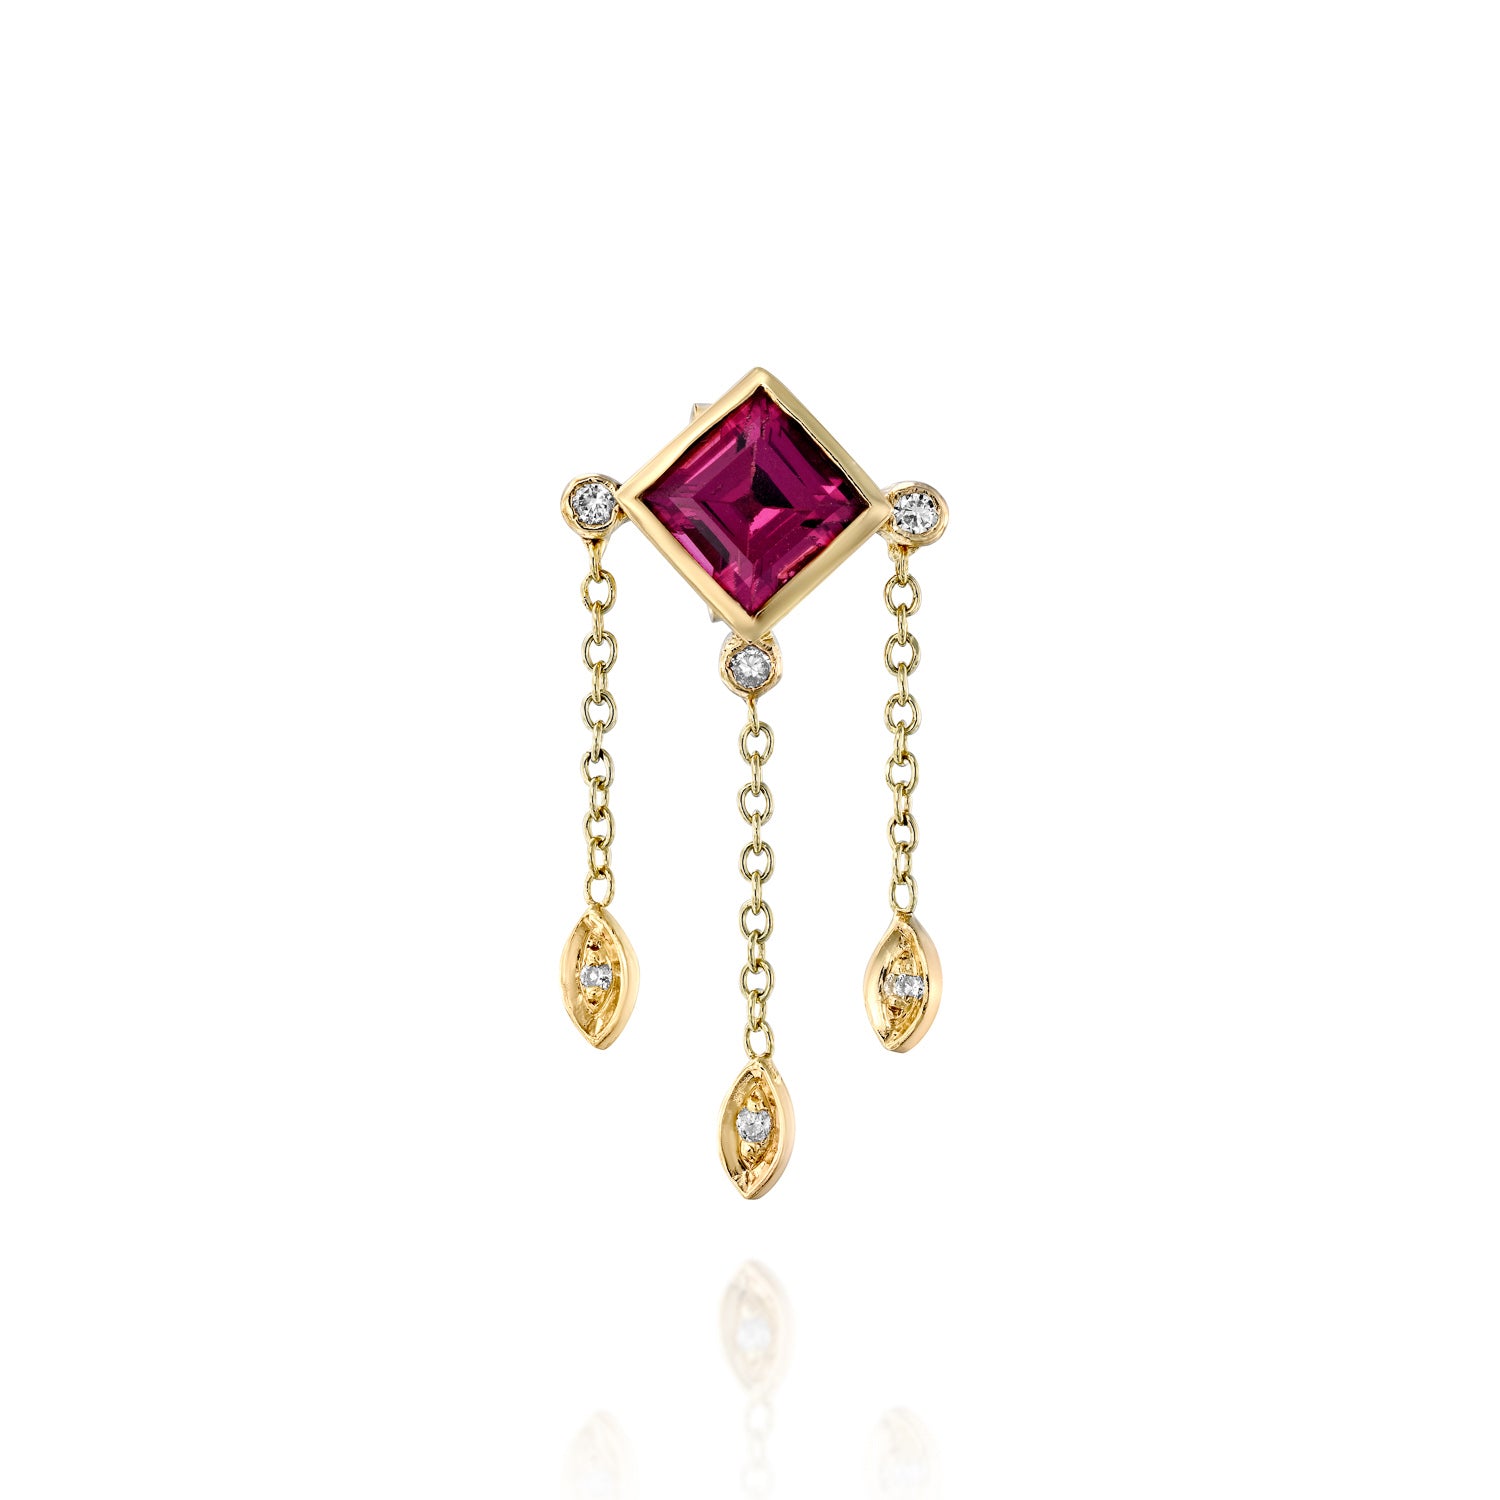 Dharamsala Earring & Pink Tourmaline  - one of a kind - Danielle Gerber Freedom Jewelry